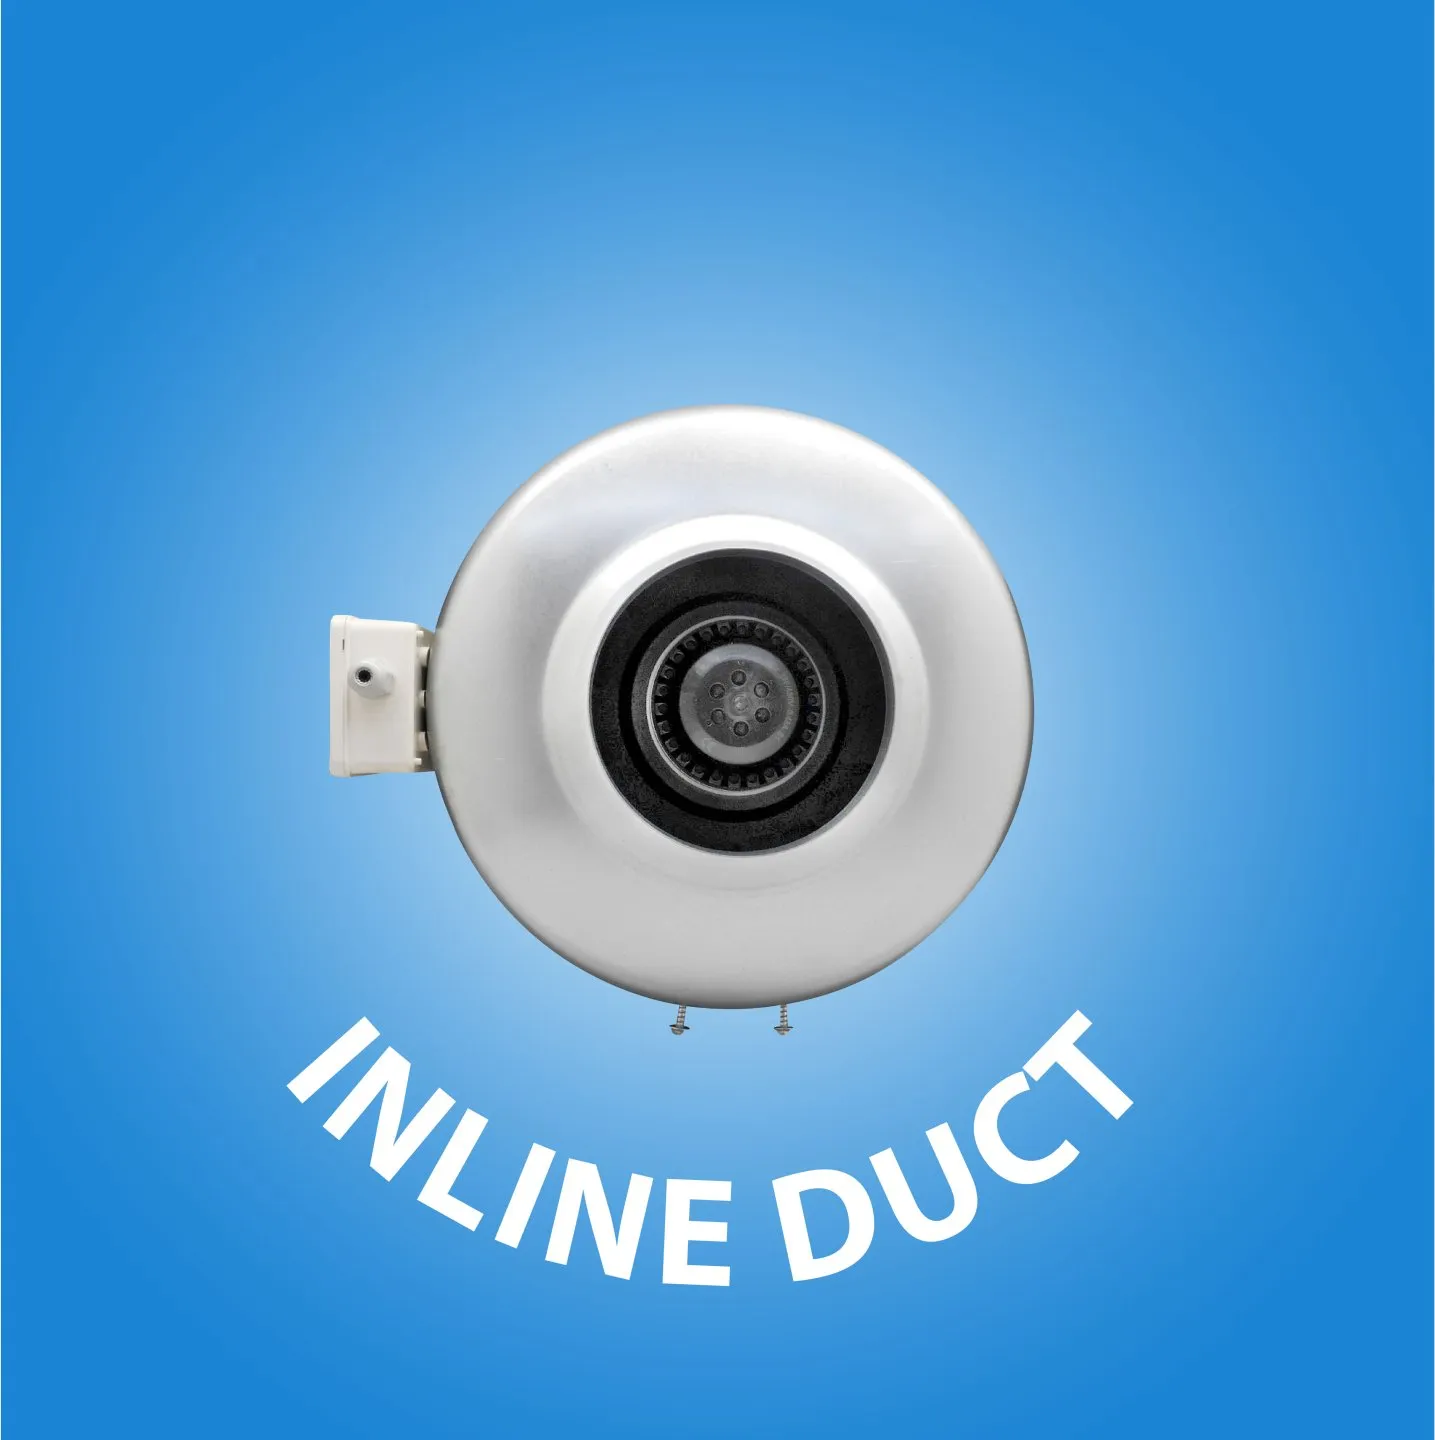  Inline Duct cover kategori website 26